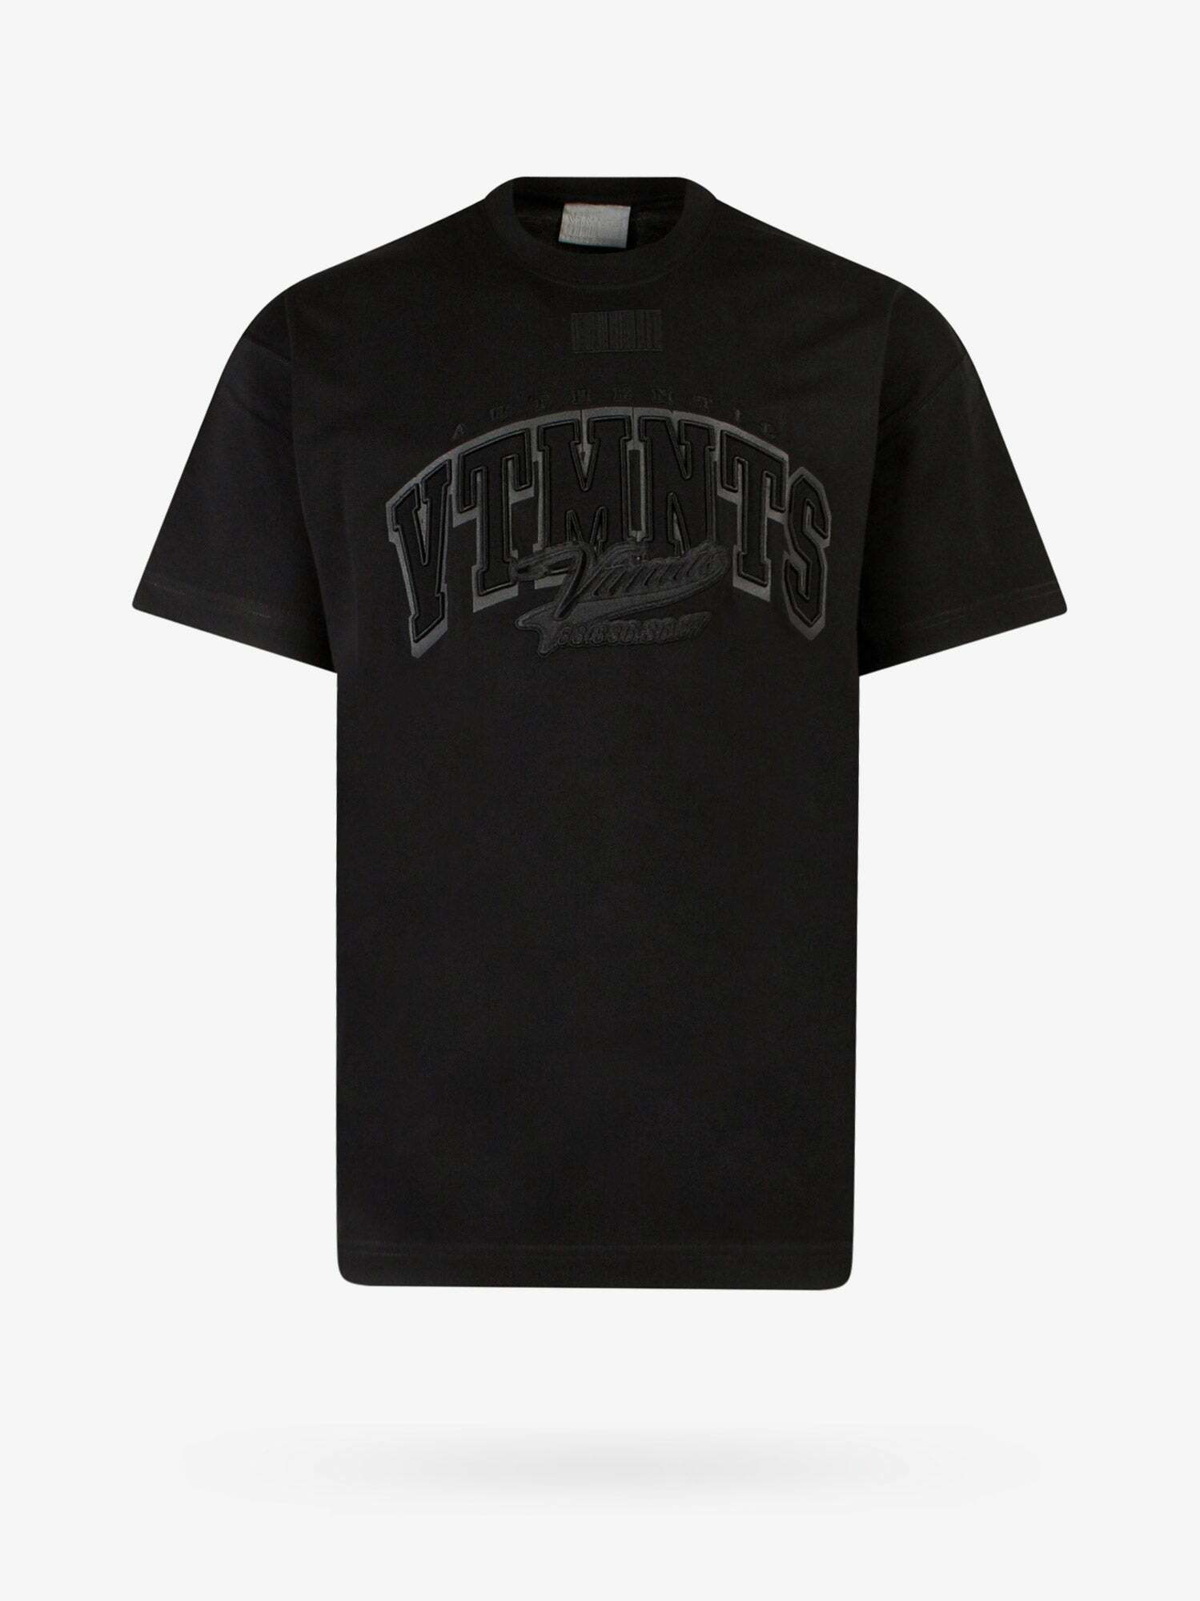 Vtmnts T Shirt Black Mens VTMNTS